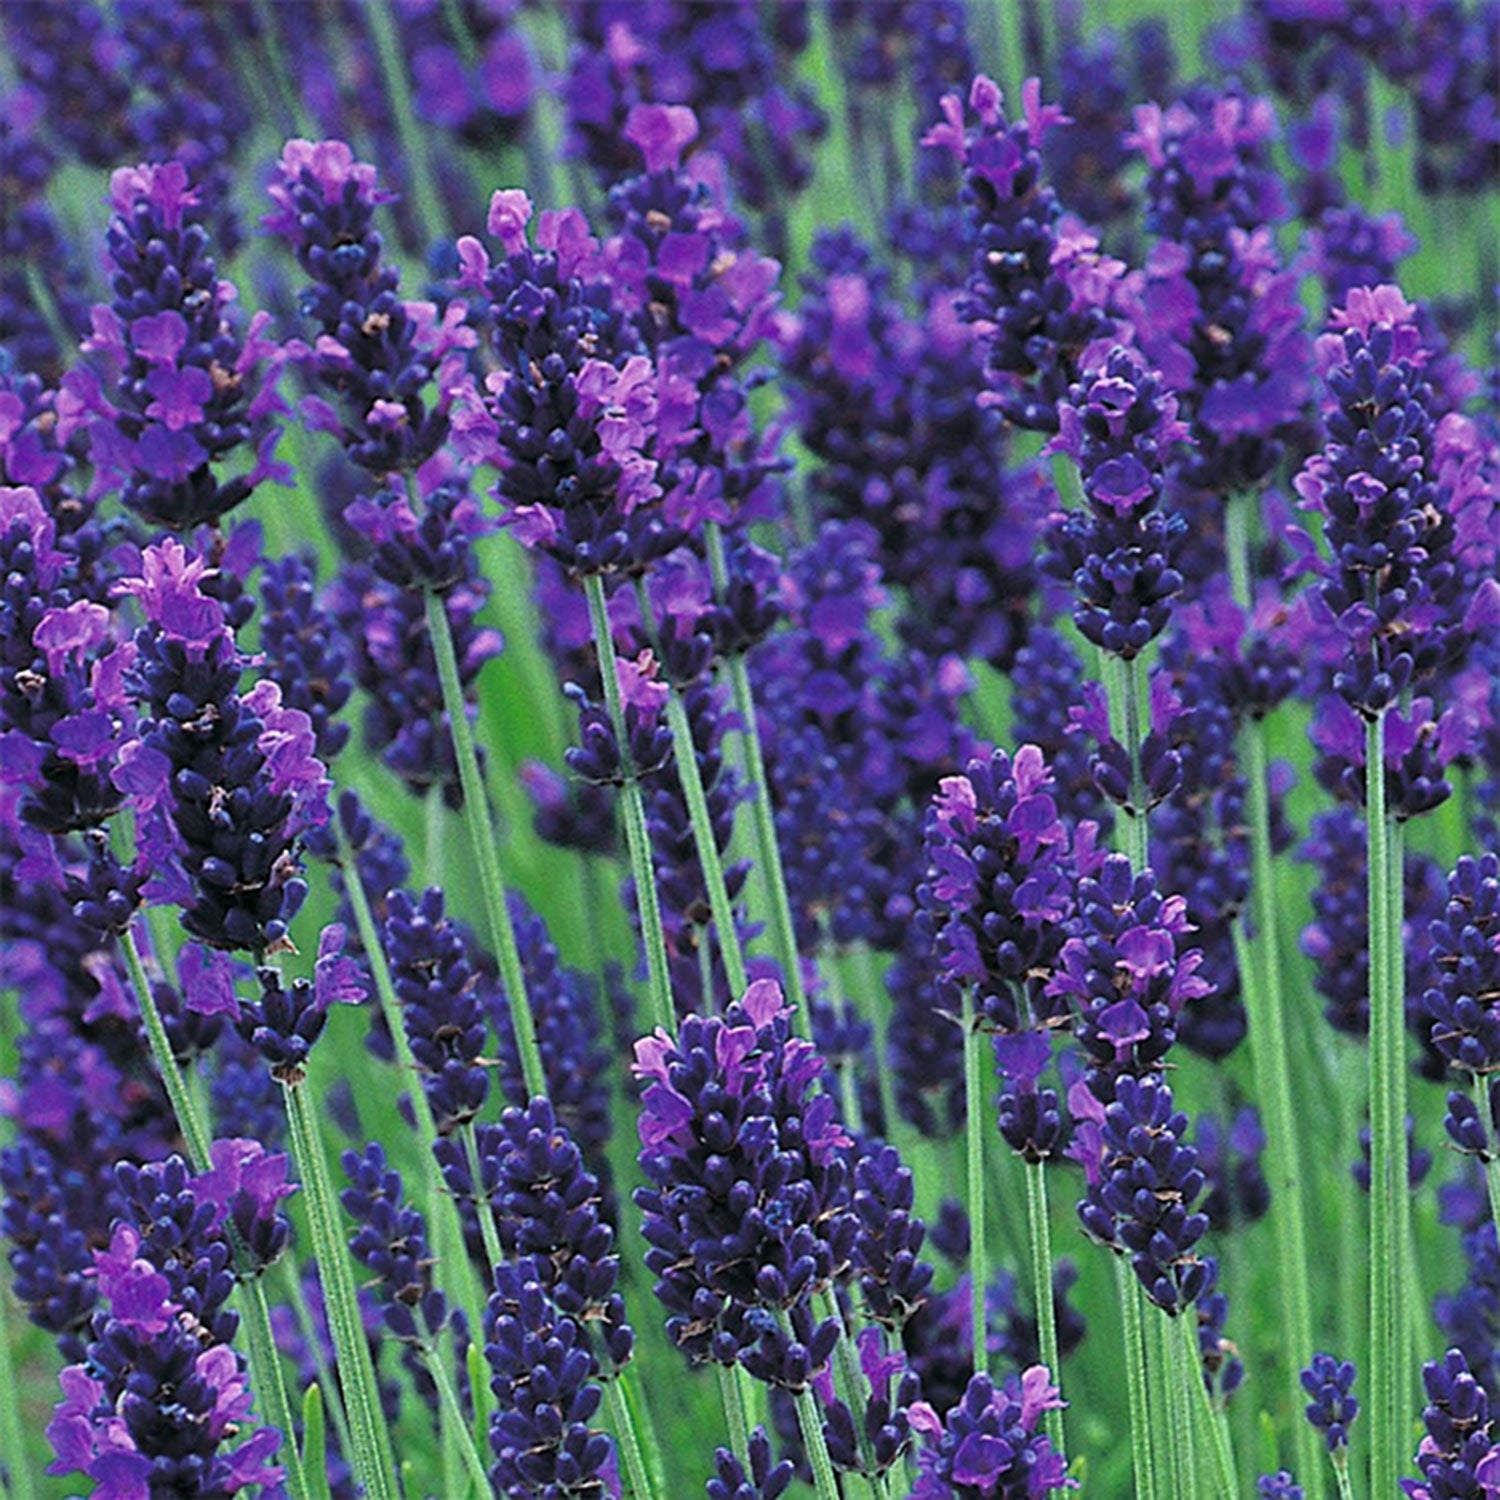 How to grow lavender 2023 - An expert shares their advice